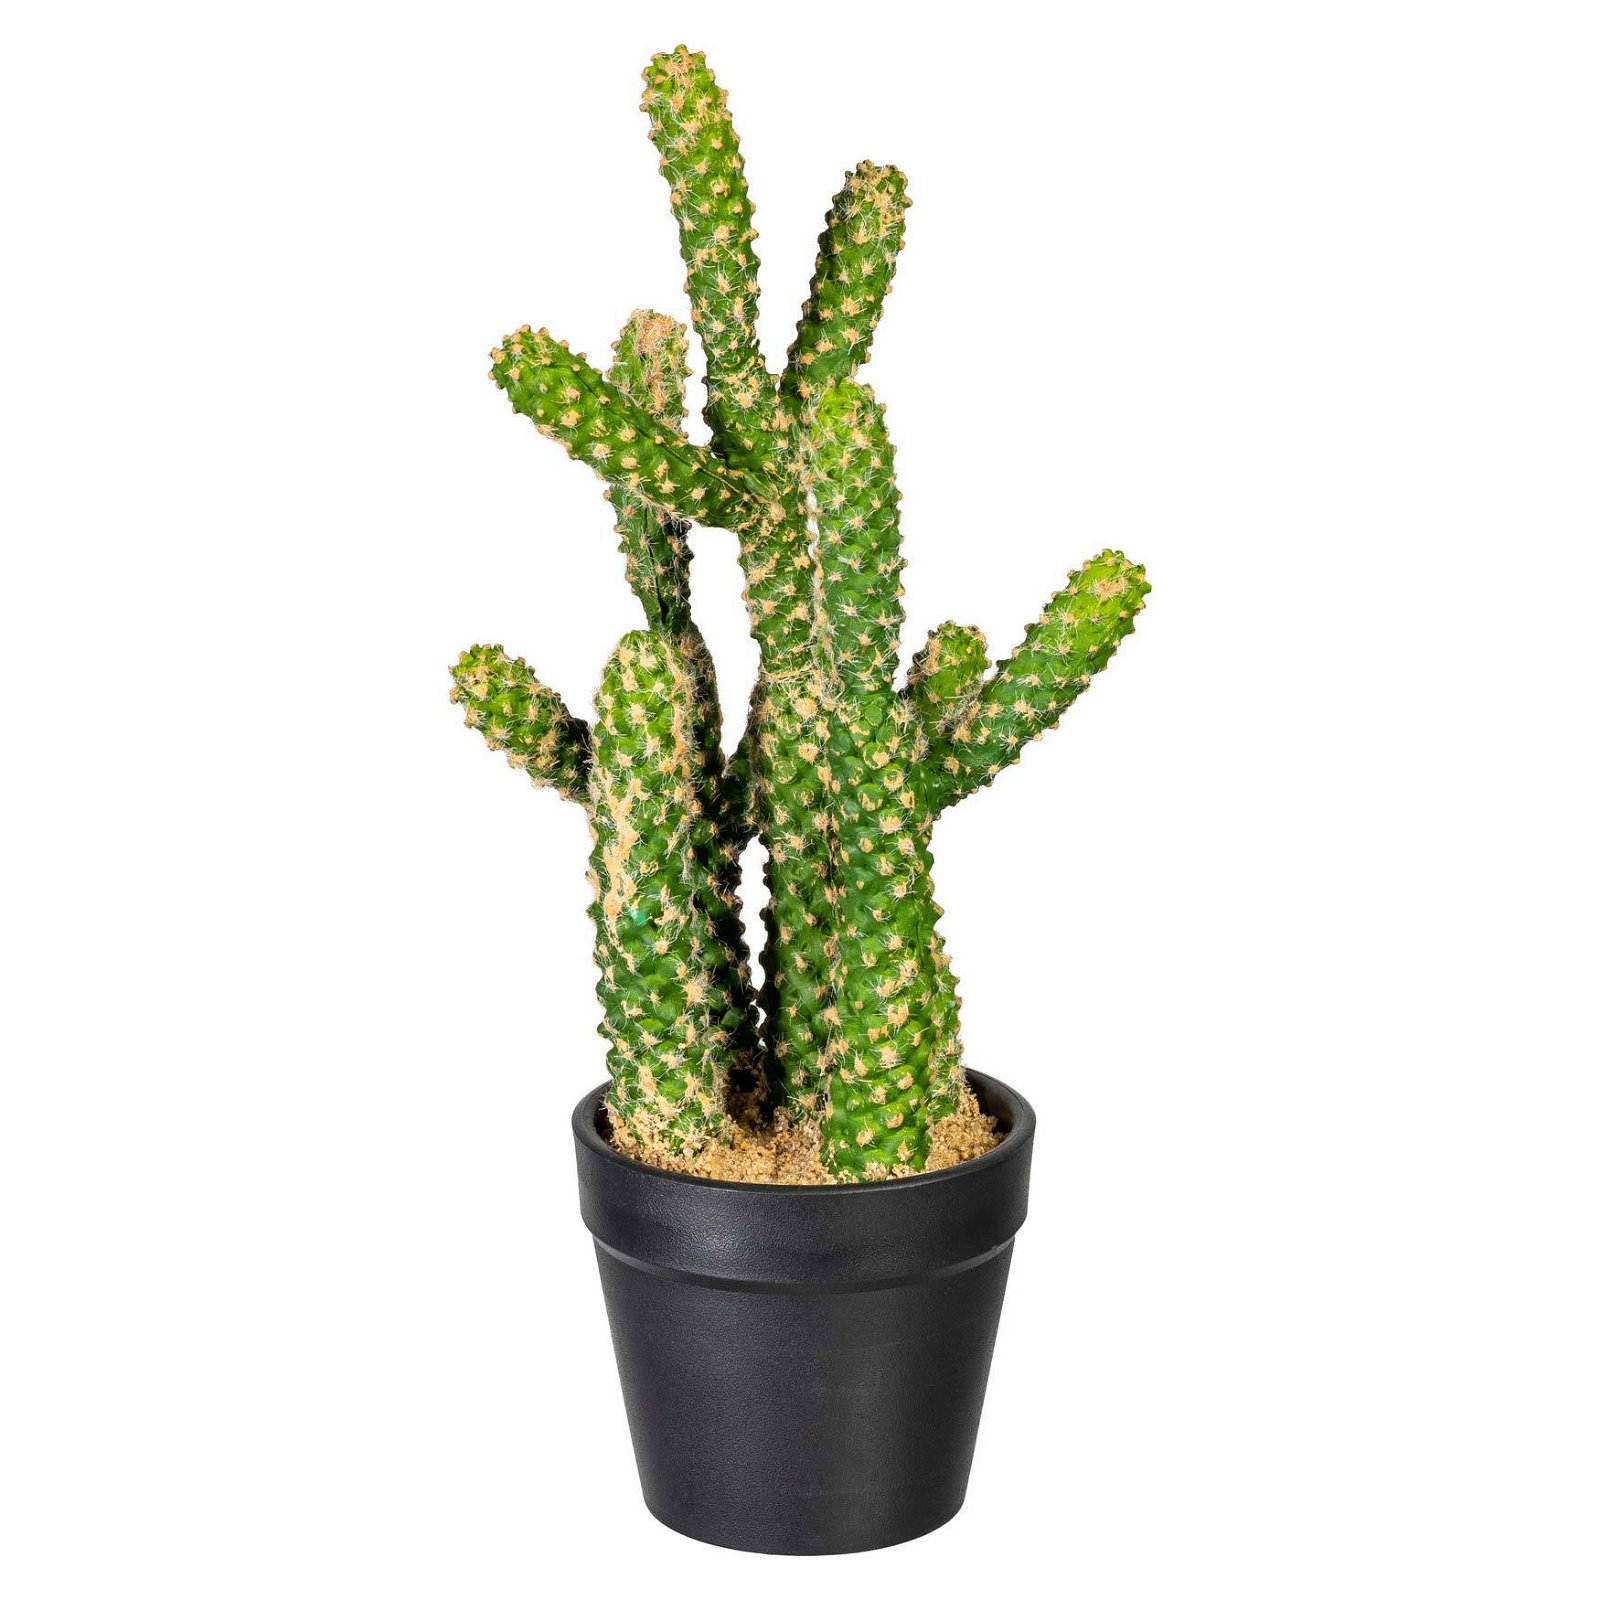 https://cdn.pflanzen-koelle.de/media/aa/ab/b9/1659621914/2220102044-Kaktus-Euphorbia-x5-gruen_67017.jpg